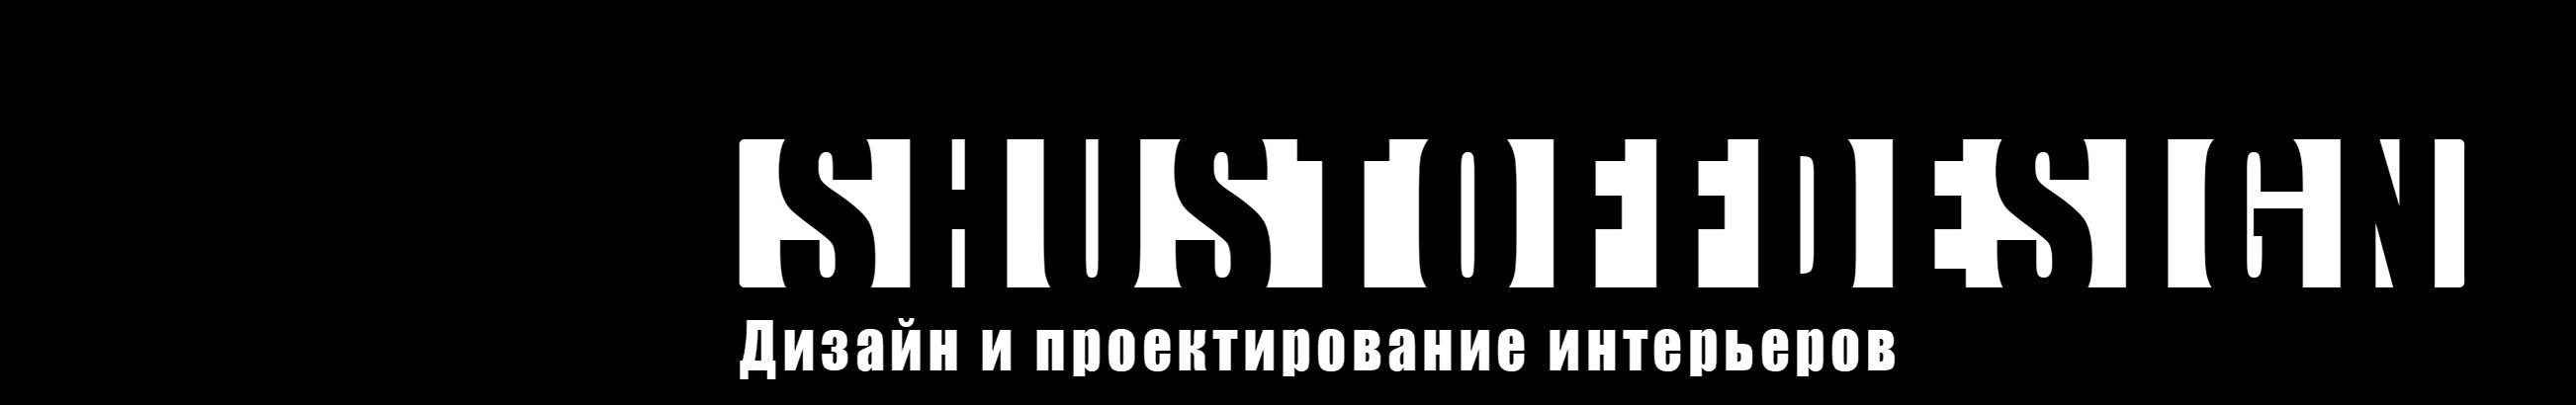 Banner profilu uživatele Sergey Shustov